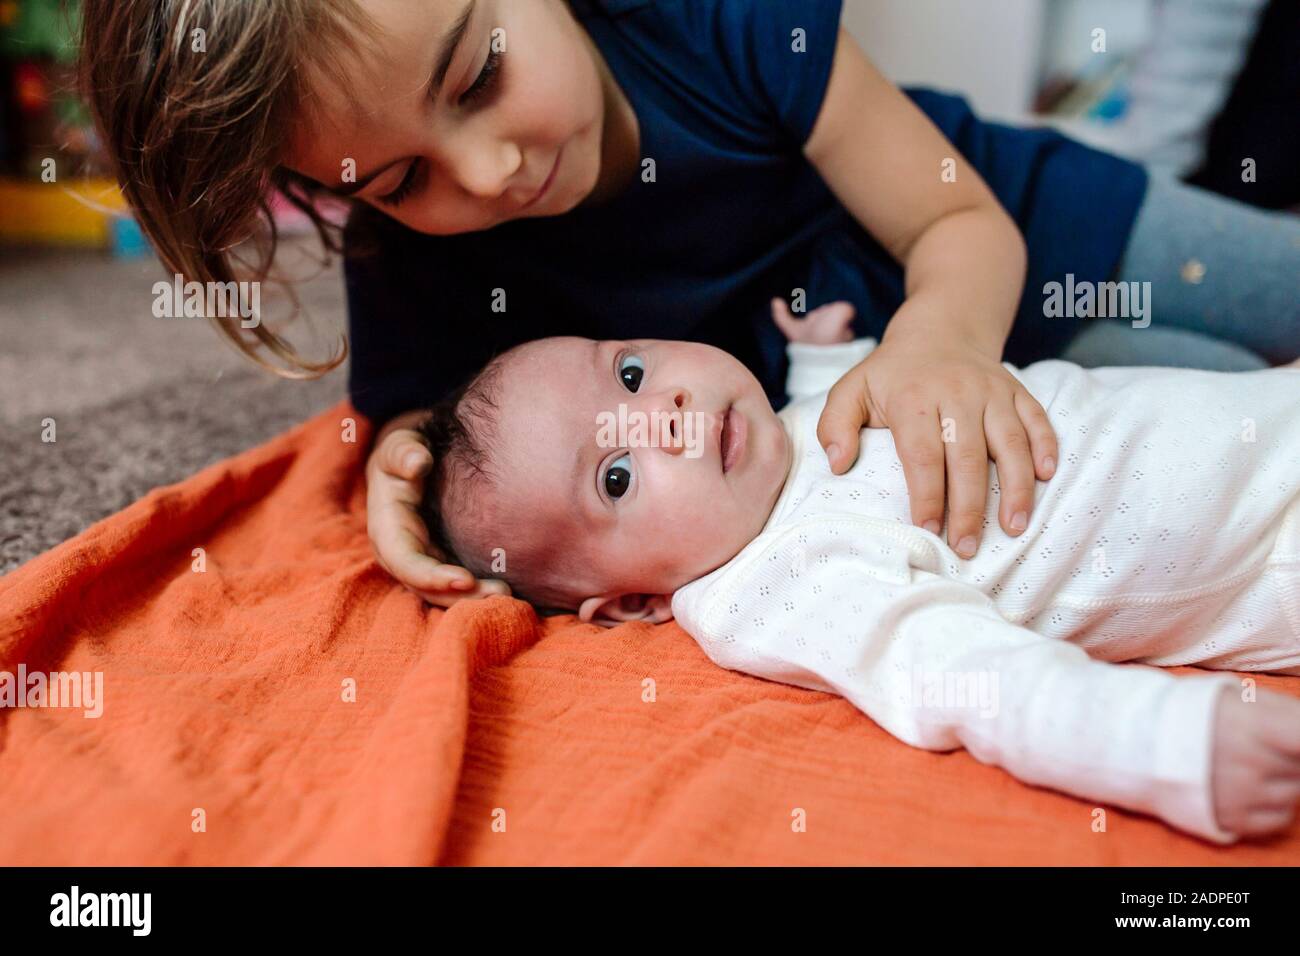 Big sister touching wide-eyed baby with lying on orange blanket Stock Photo